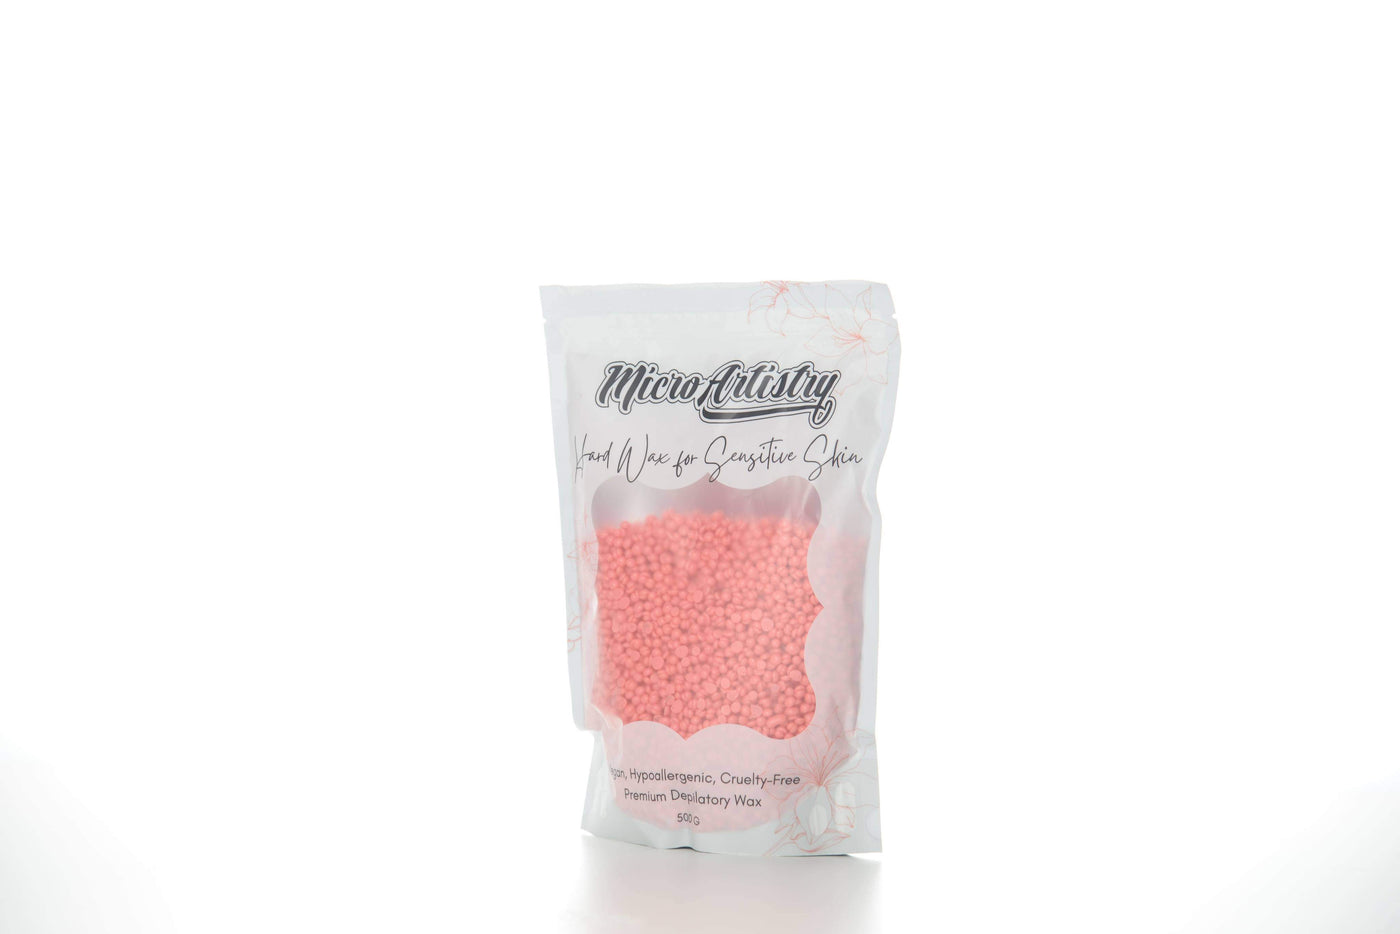 Microartistry hard pink wax for sensitive skin